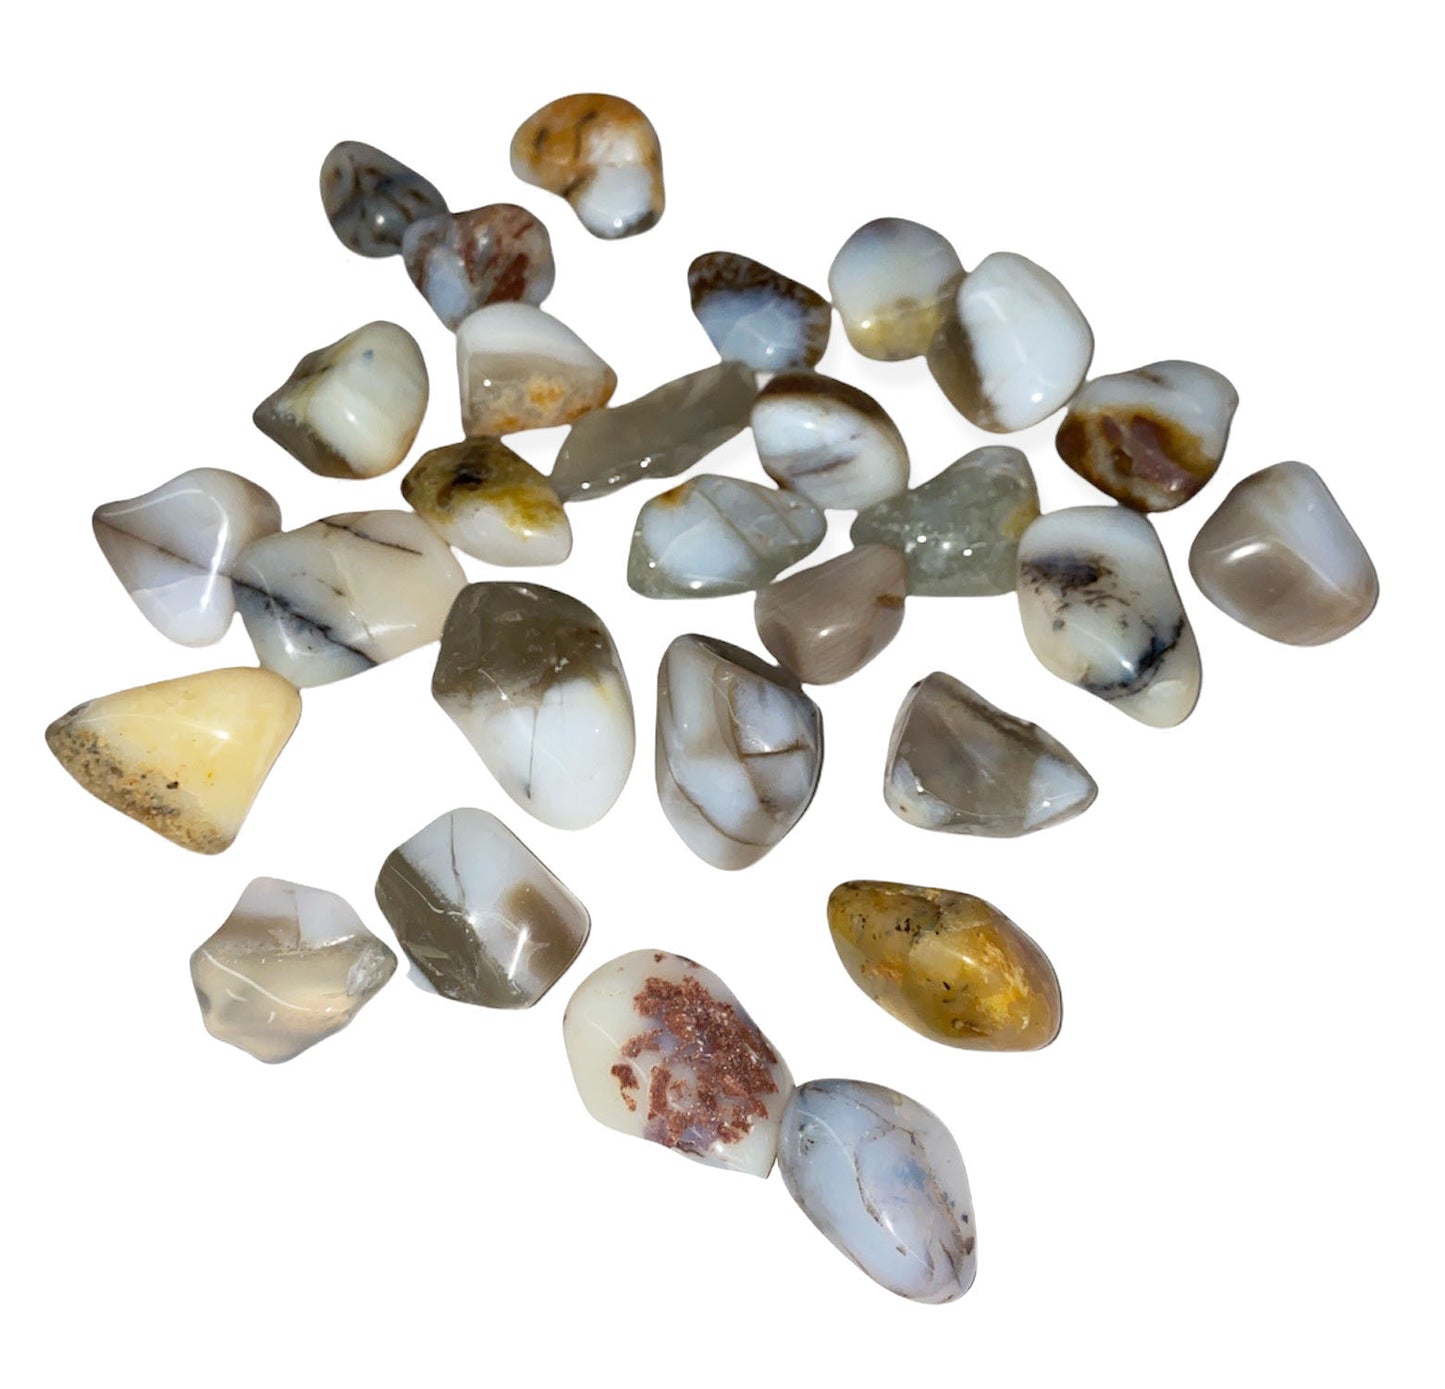 White Opal Quality 1 Tumbled Stones - Medium 25 - 40 mm - 1 lb - Brazil 2a - NEW122